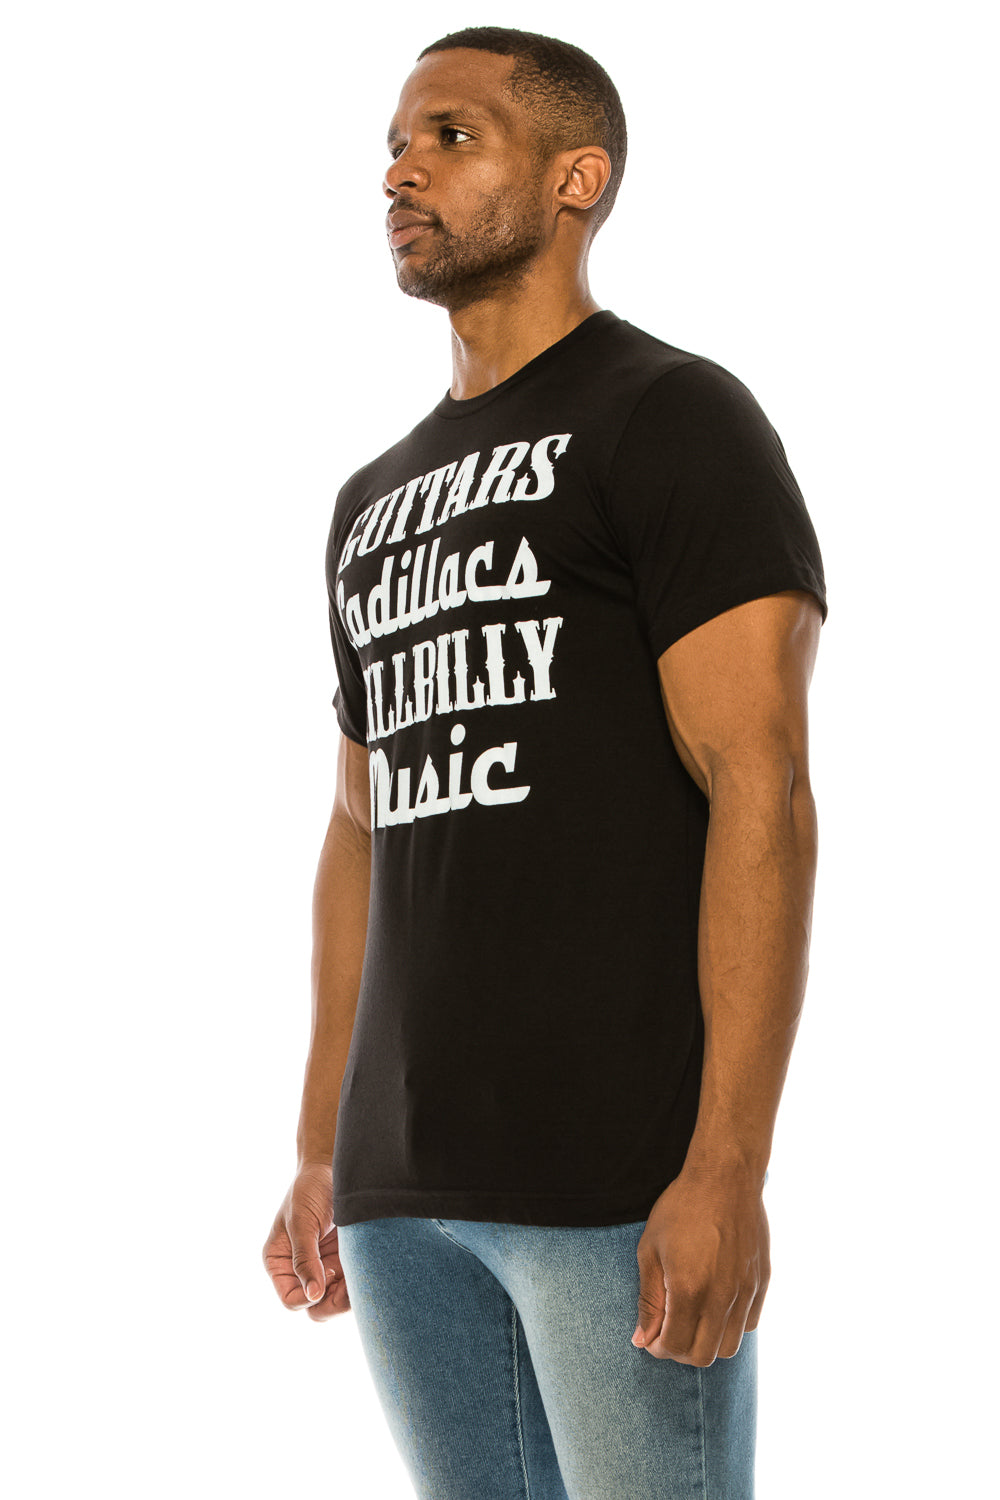 Guitars Cadillacs Hillbilly Music Shirt | Dwight Yoakam T-Shirt ...